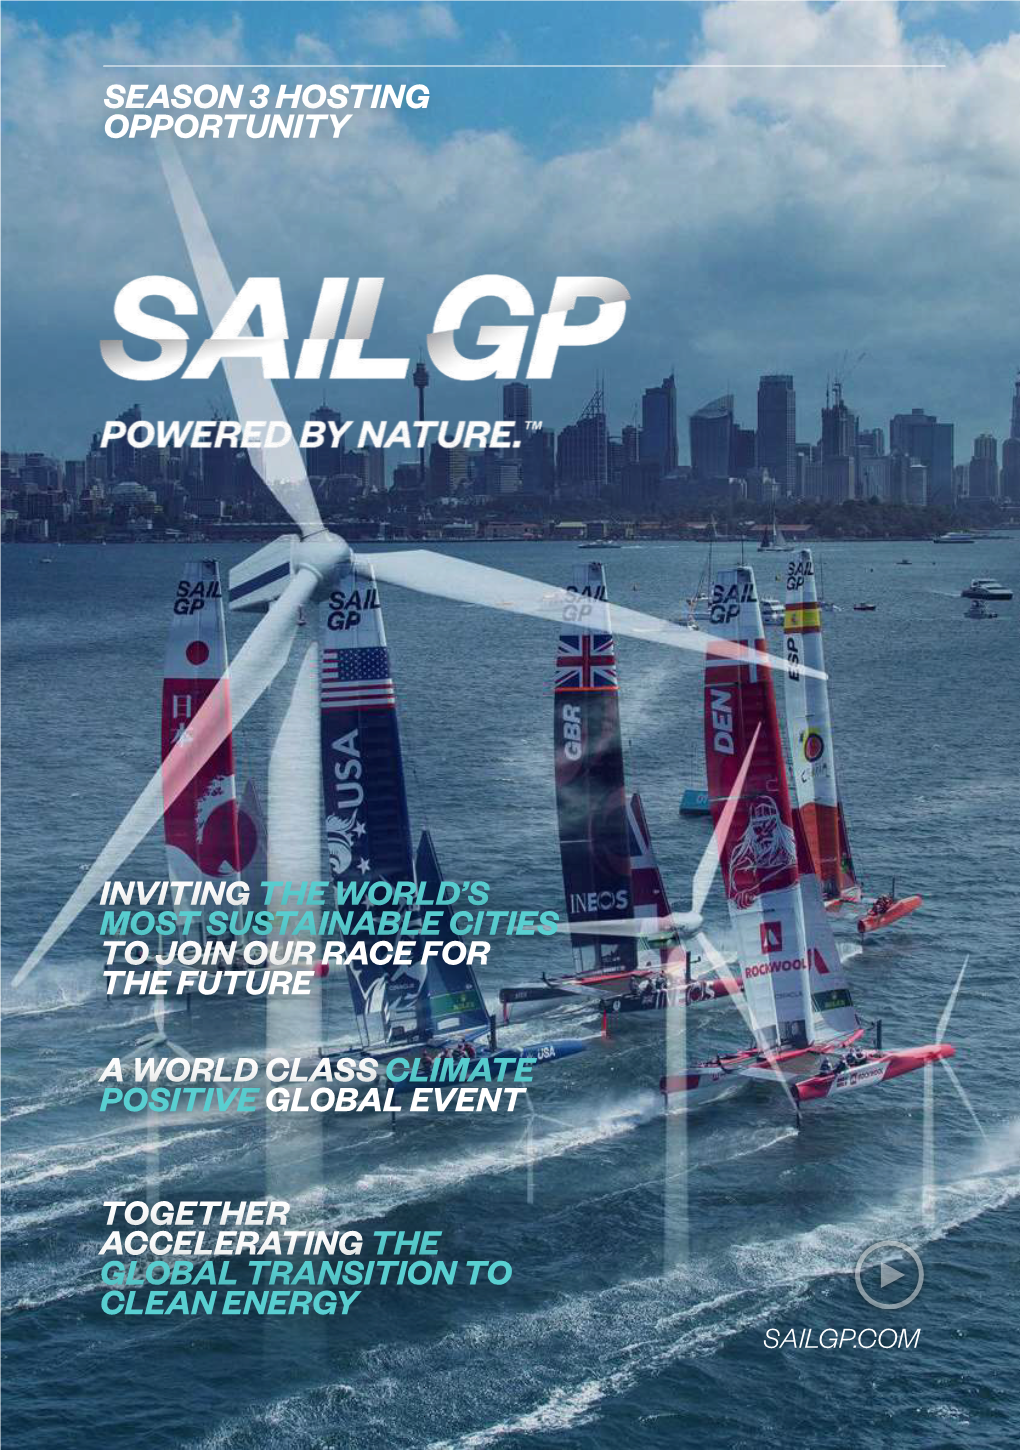 Sailgp Intro Venue Partnerships Season 3 V25feb